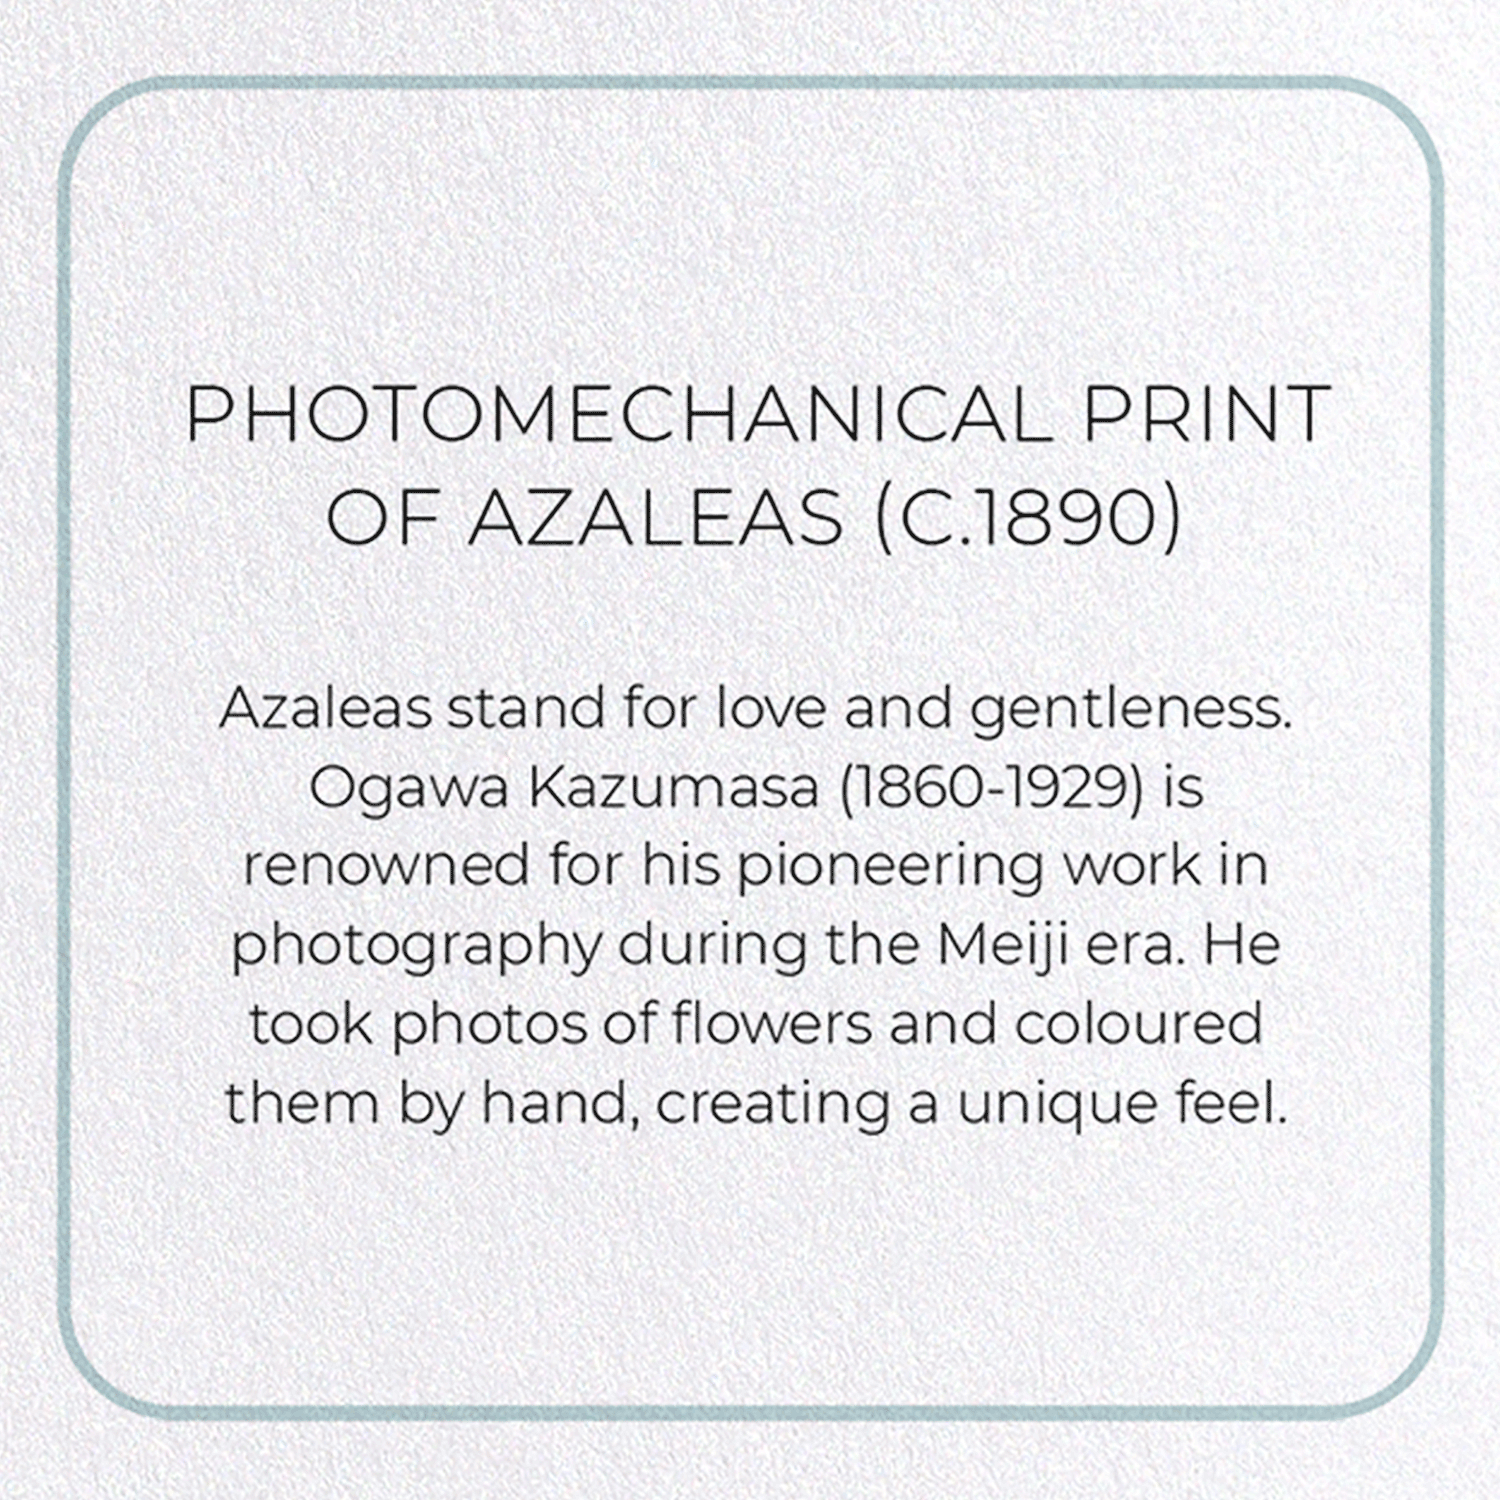 PHOTOMECHANICAL PRINT OF AZALEAS (C.1890): Photo Greeting Card